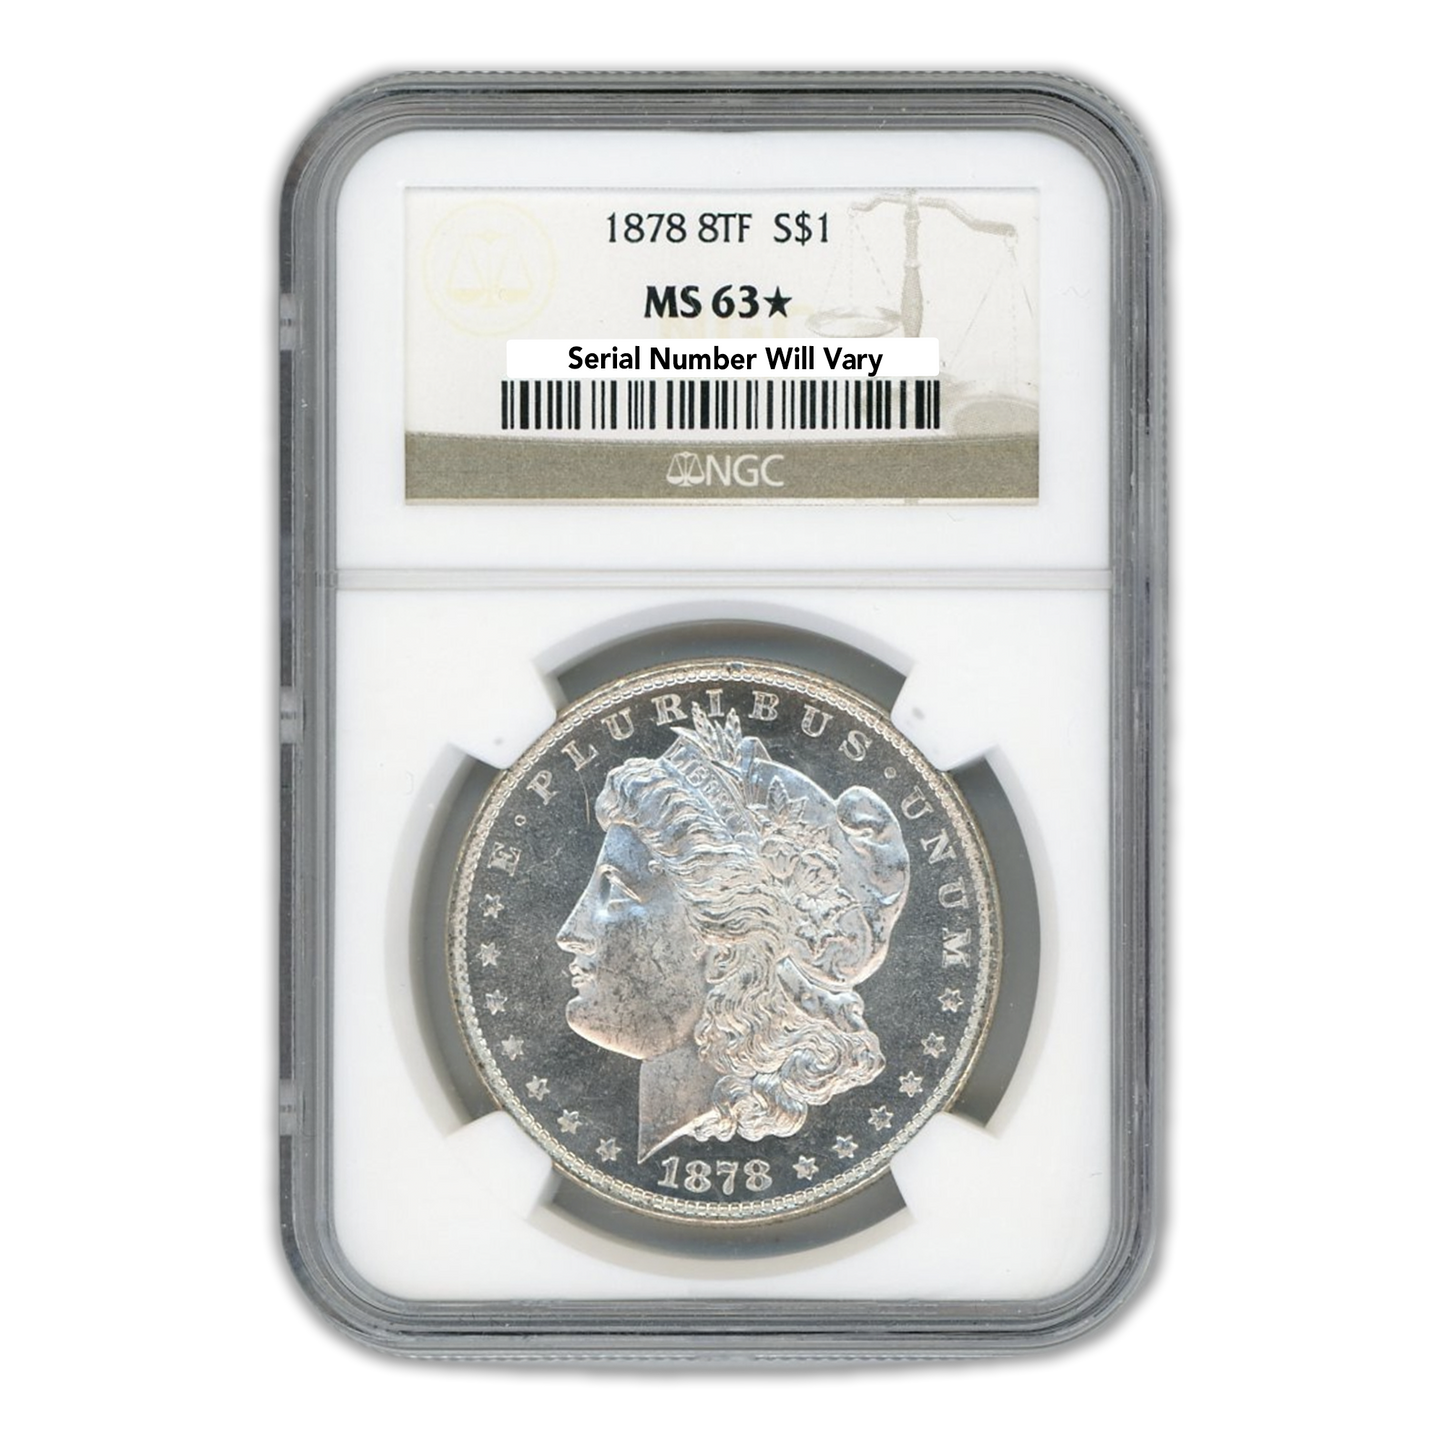 1878 Morgan Silver Dollar 7/8 Tailfeathers - NGC MS63*